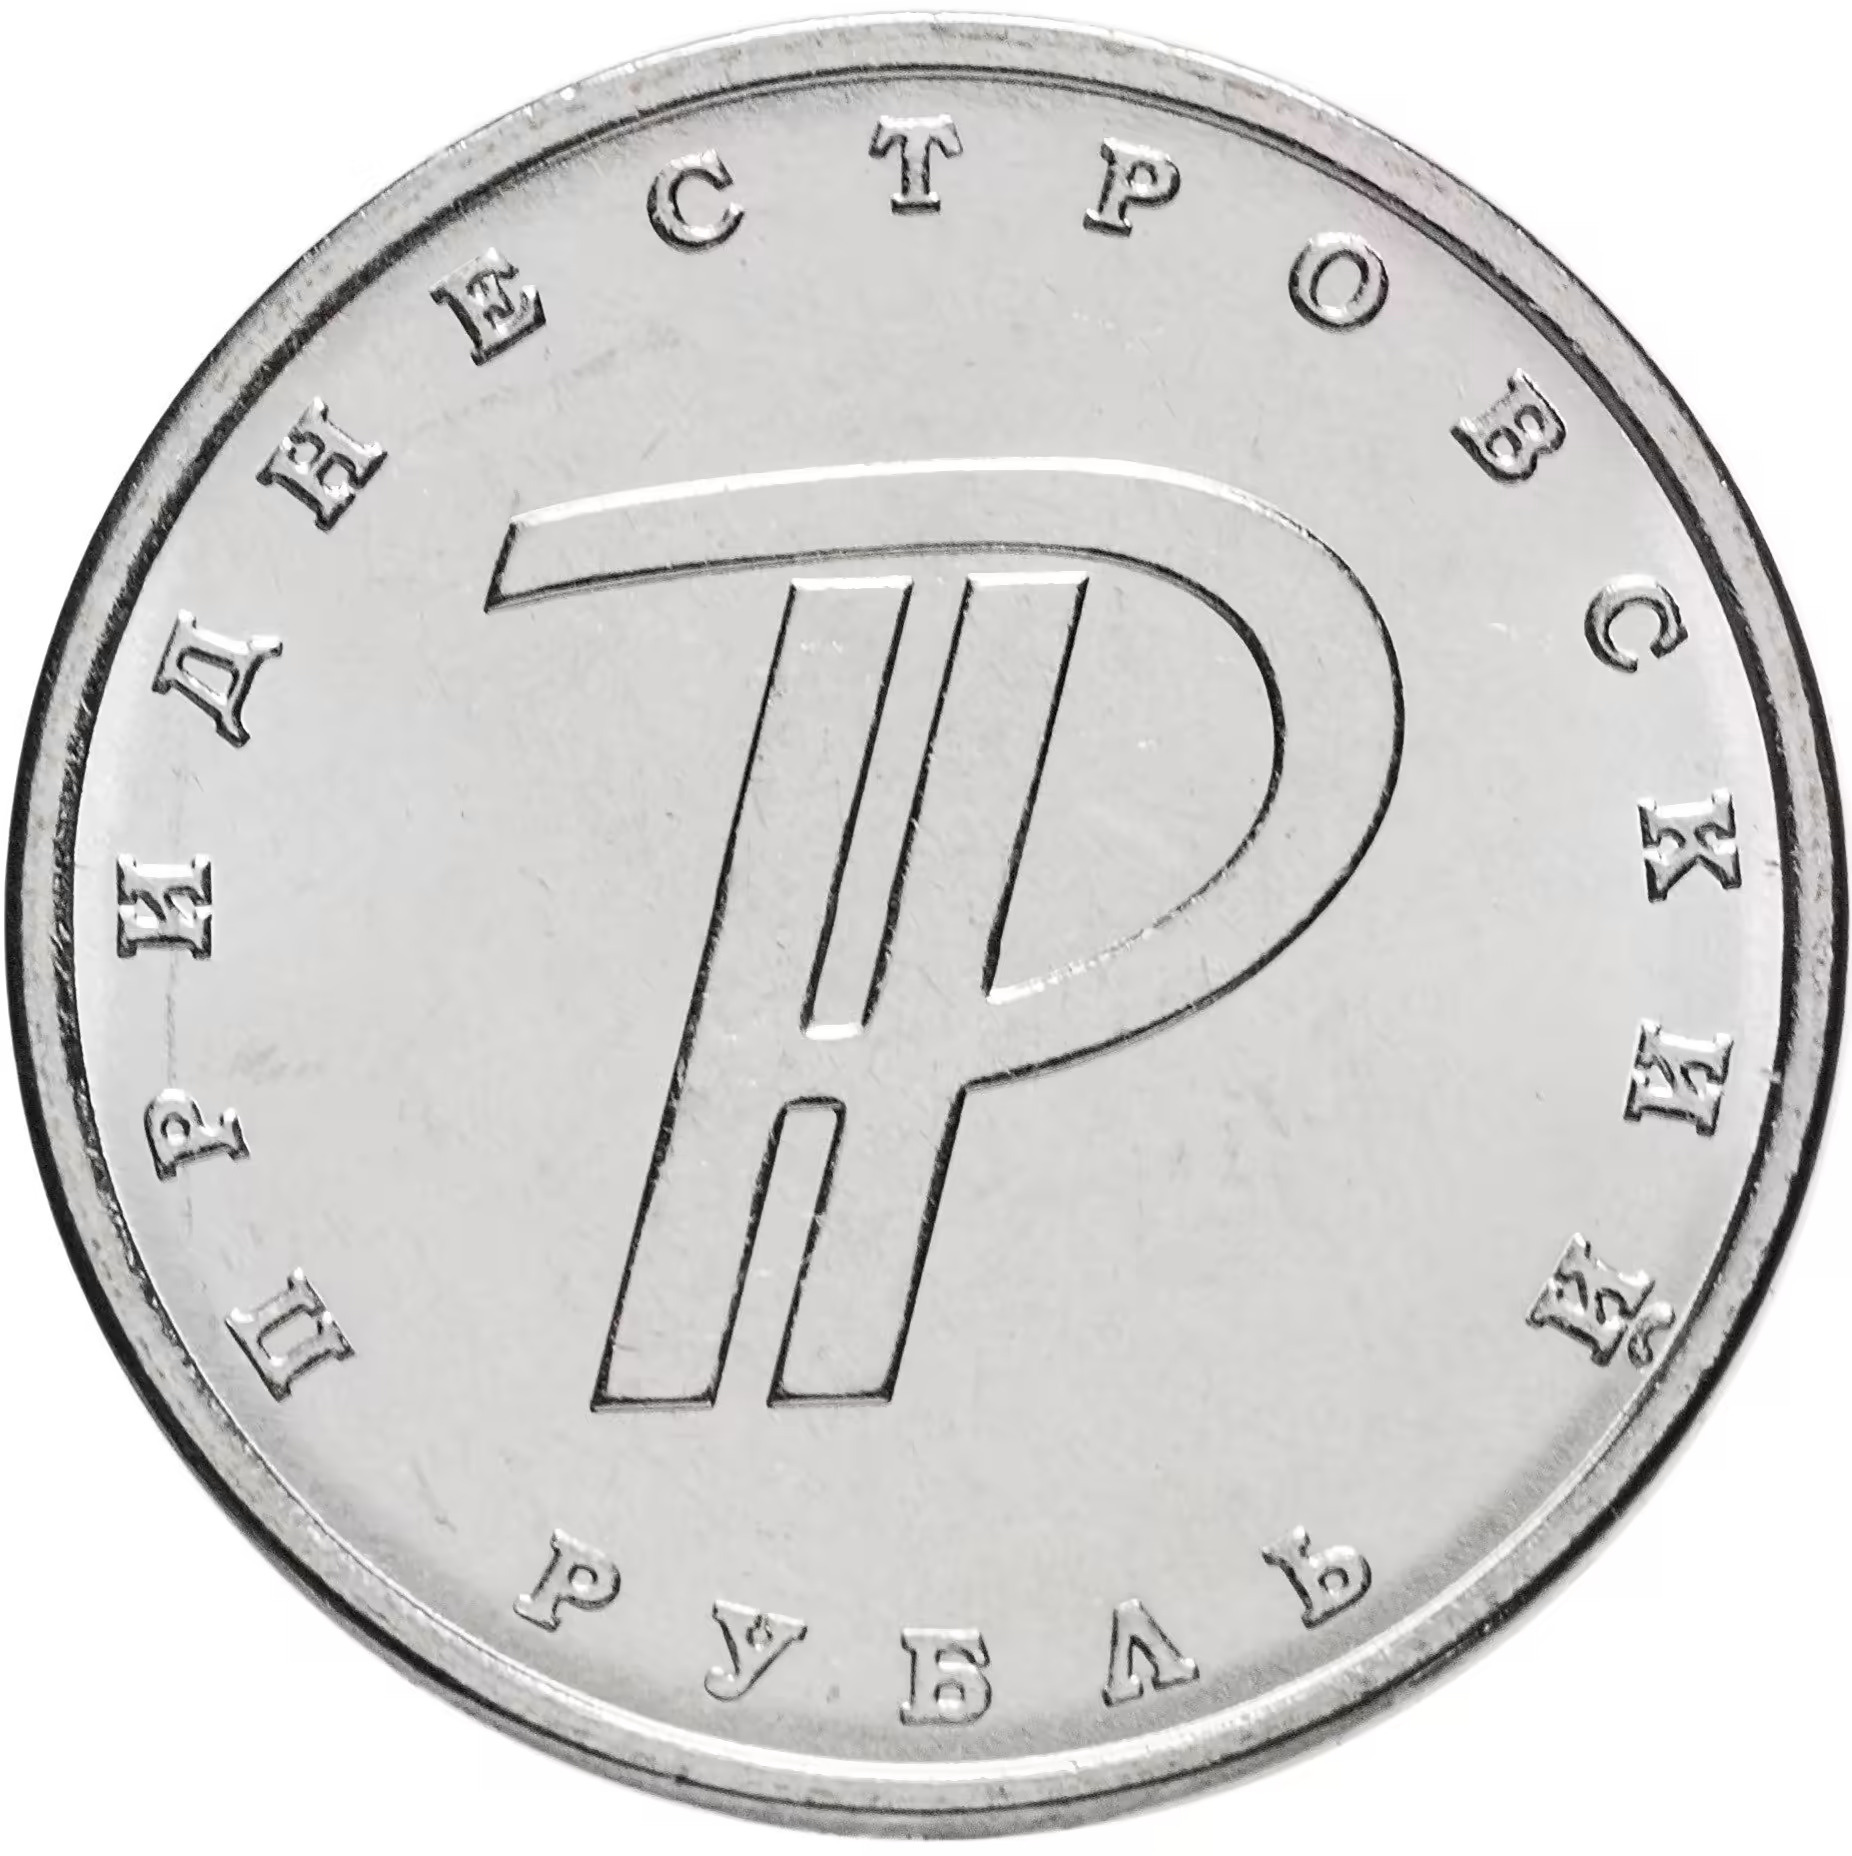 Монета знак рубля. 1 Рубль Приднестровье. Монета Приднестровья 1 рубль 2015. Приднестровский рубль монета. 1 Рубль ПМР монета.